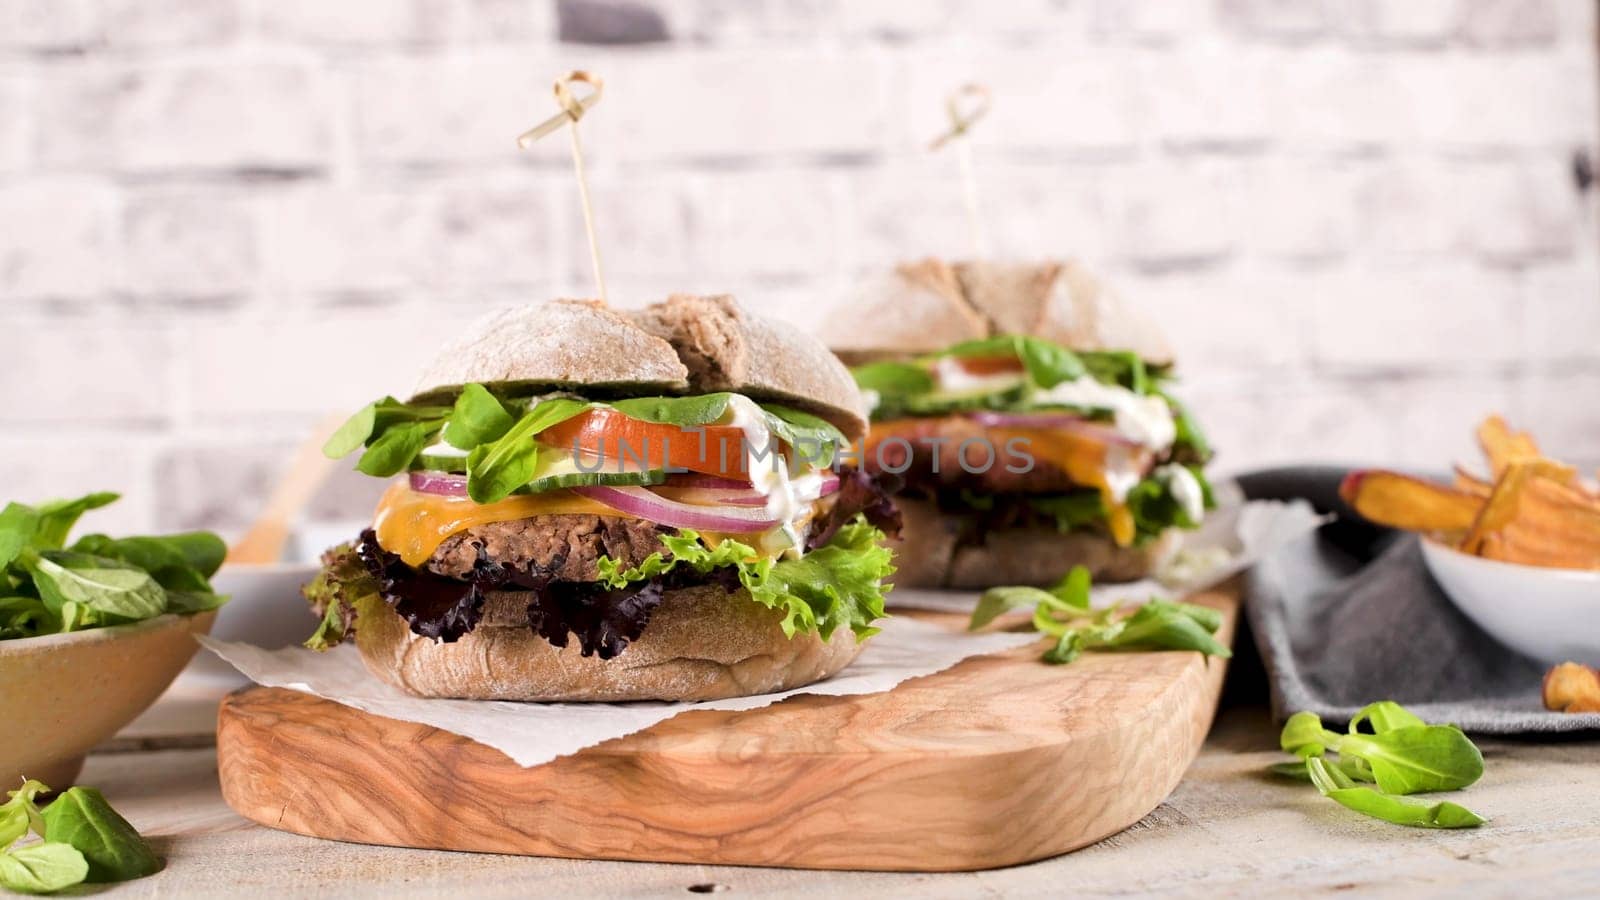 Healthy vegan burger with fresh vegetables and yogurt sauce by homydesign